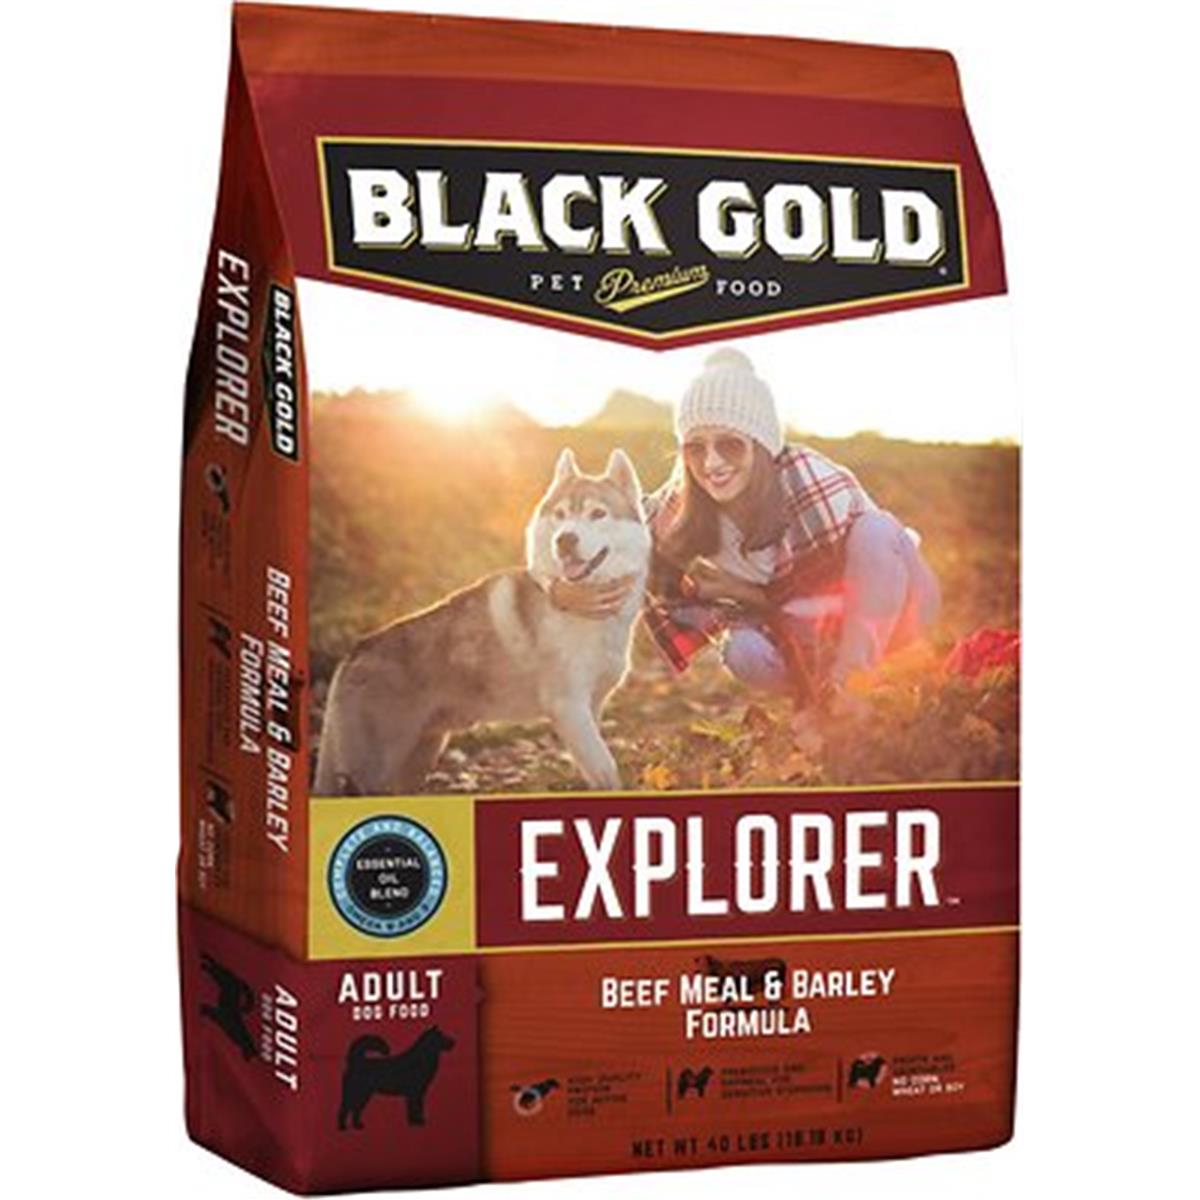 Picture of Black Gold BG26196 Explorer Beef Meal & Barley Formula Dry Dog Food - 40 lbs